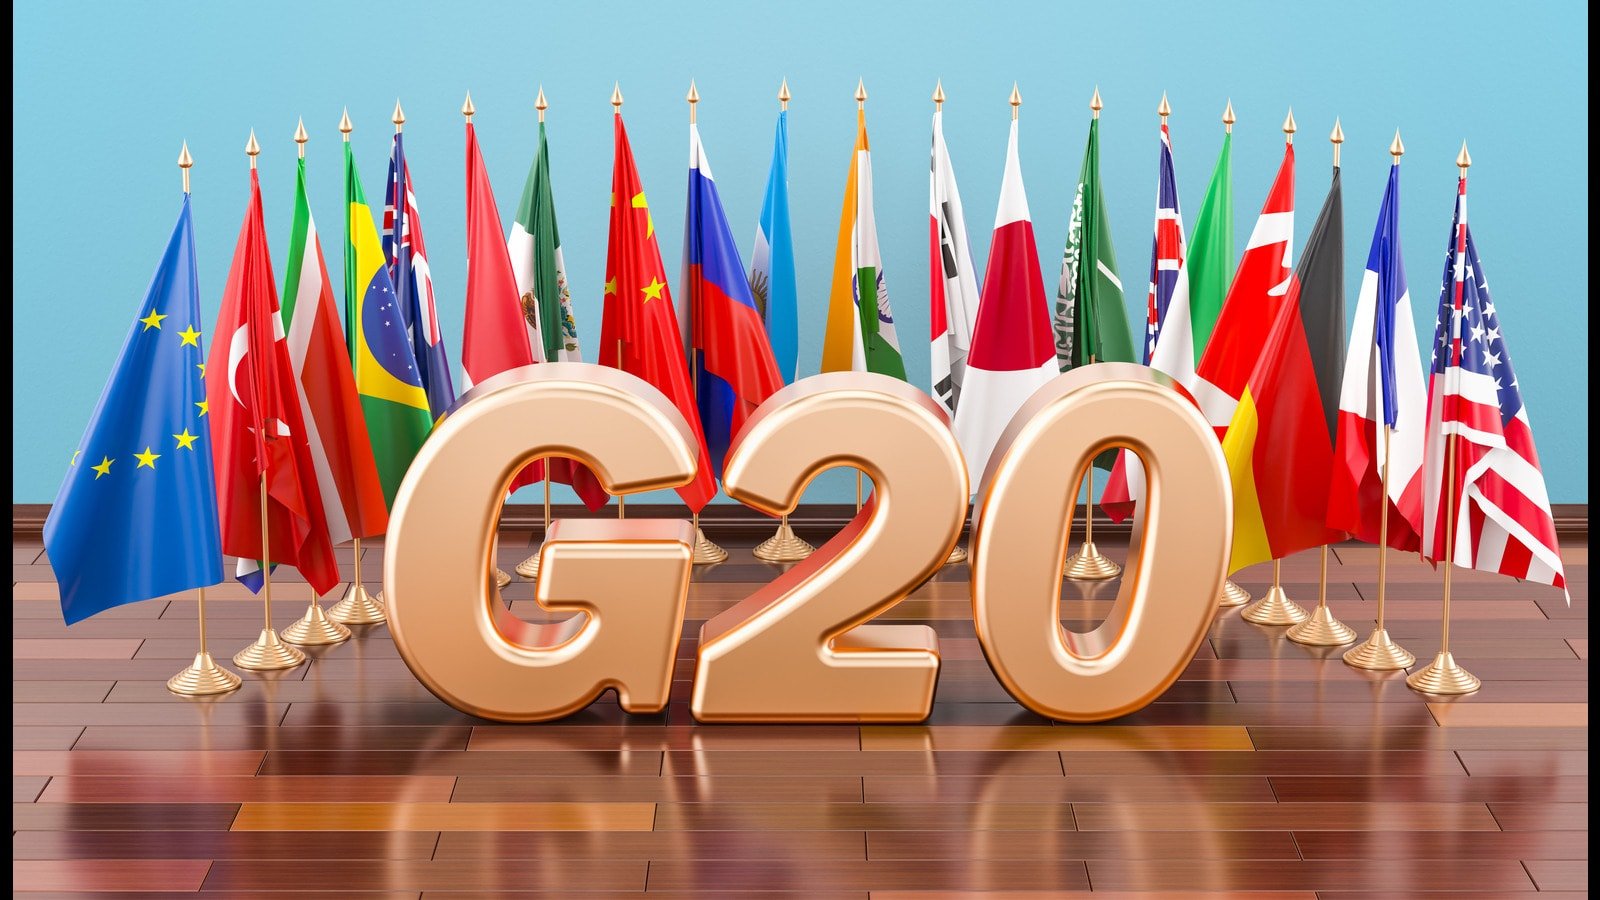 essay on india's g20 presidency